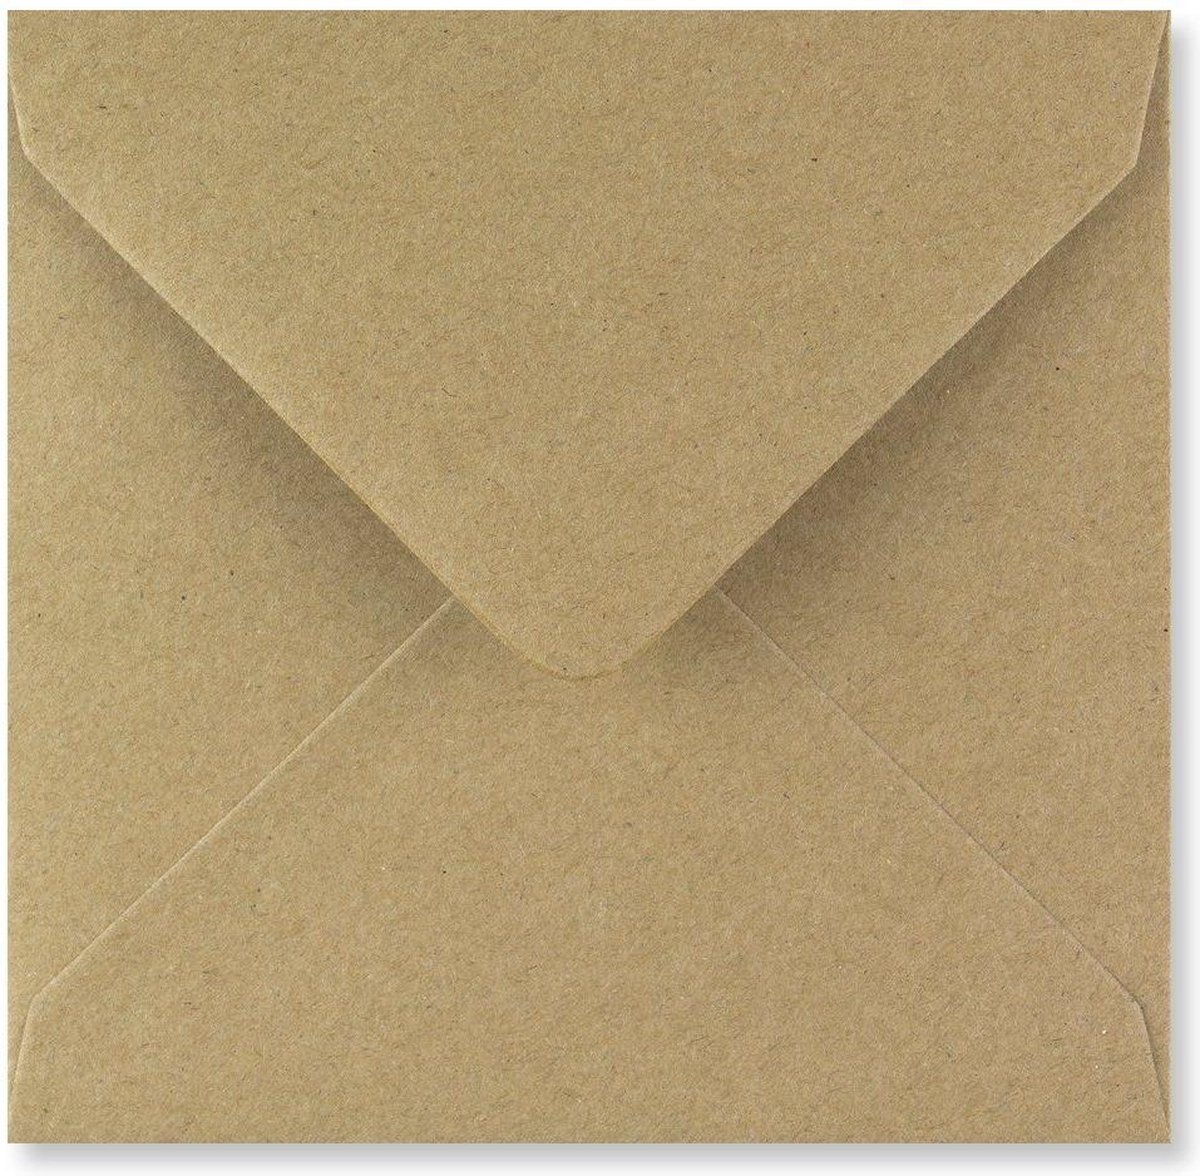 circulatie barrière geroosterd brood Kraft vierkante enveloppen 14 x 14 cm 100 stuks | bol.com